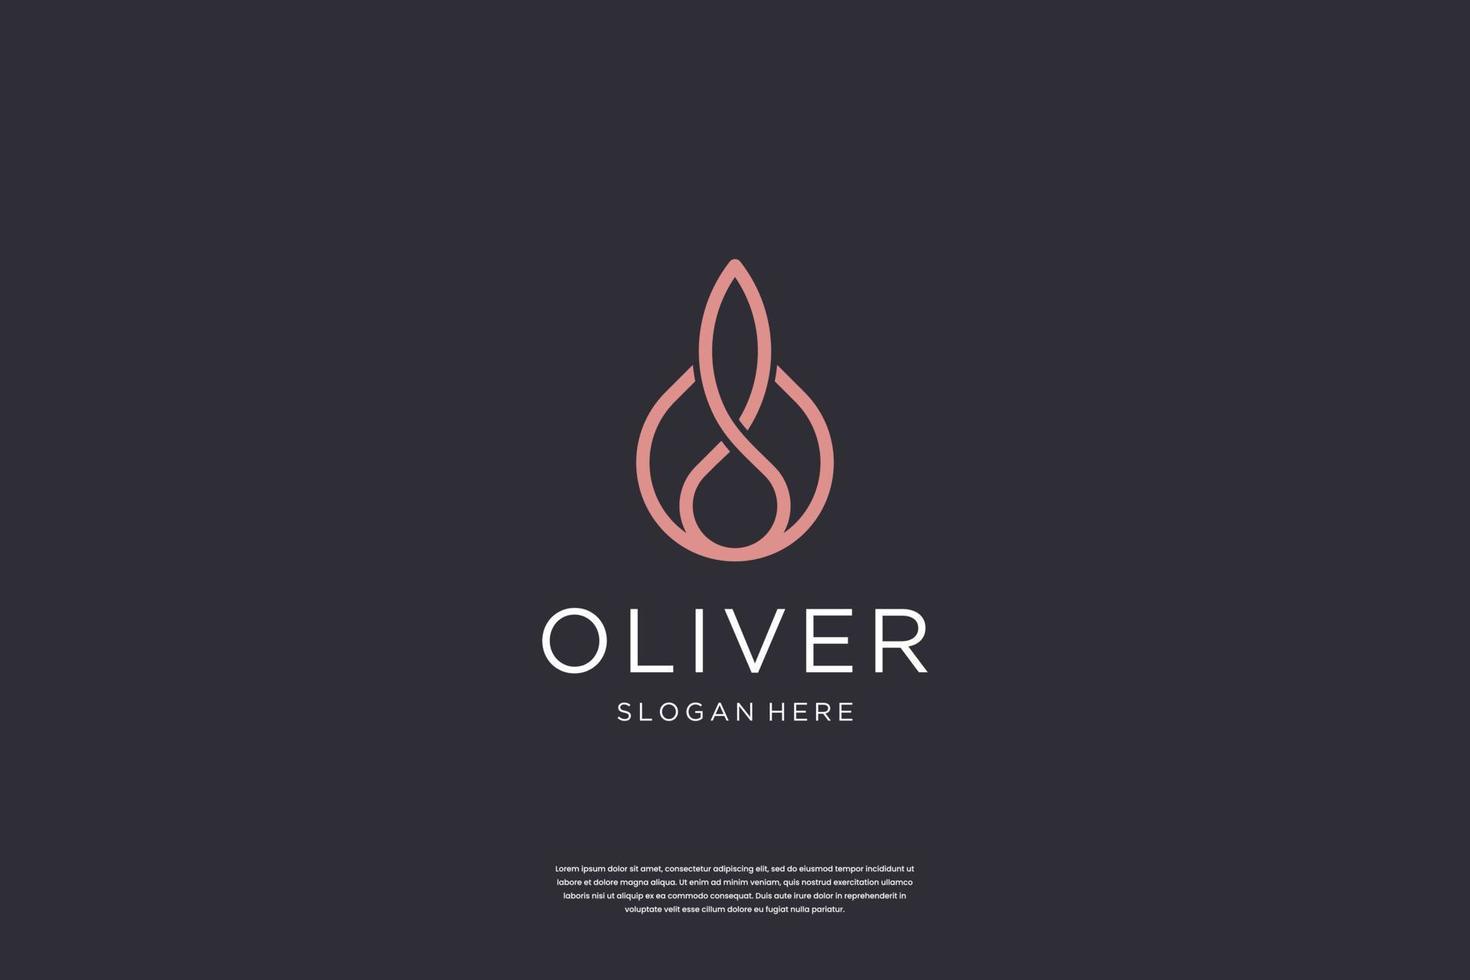 minimalista elegante oliva olio logo design con linea arte stile vettore